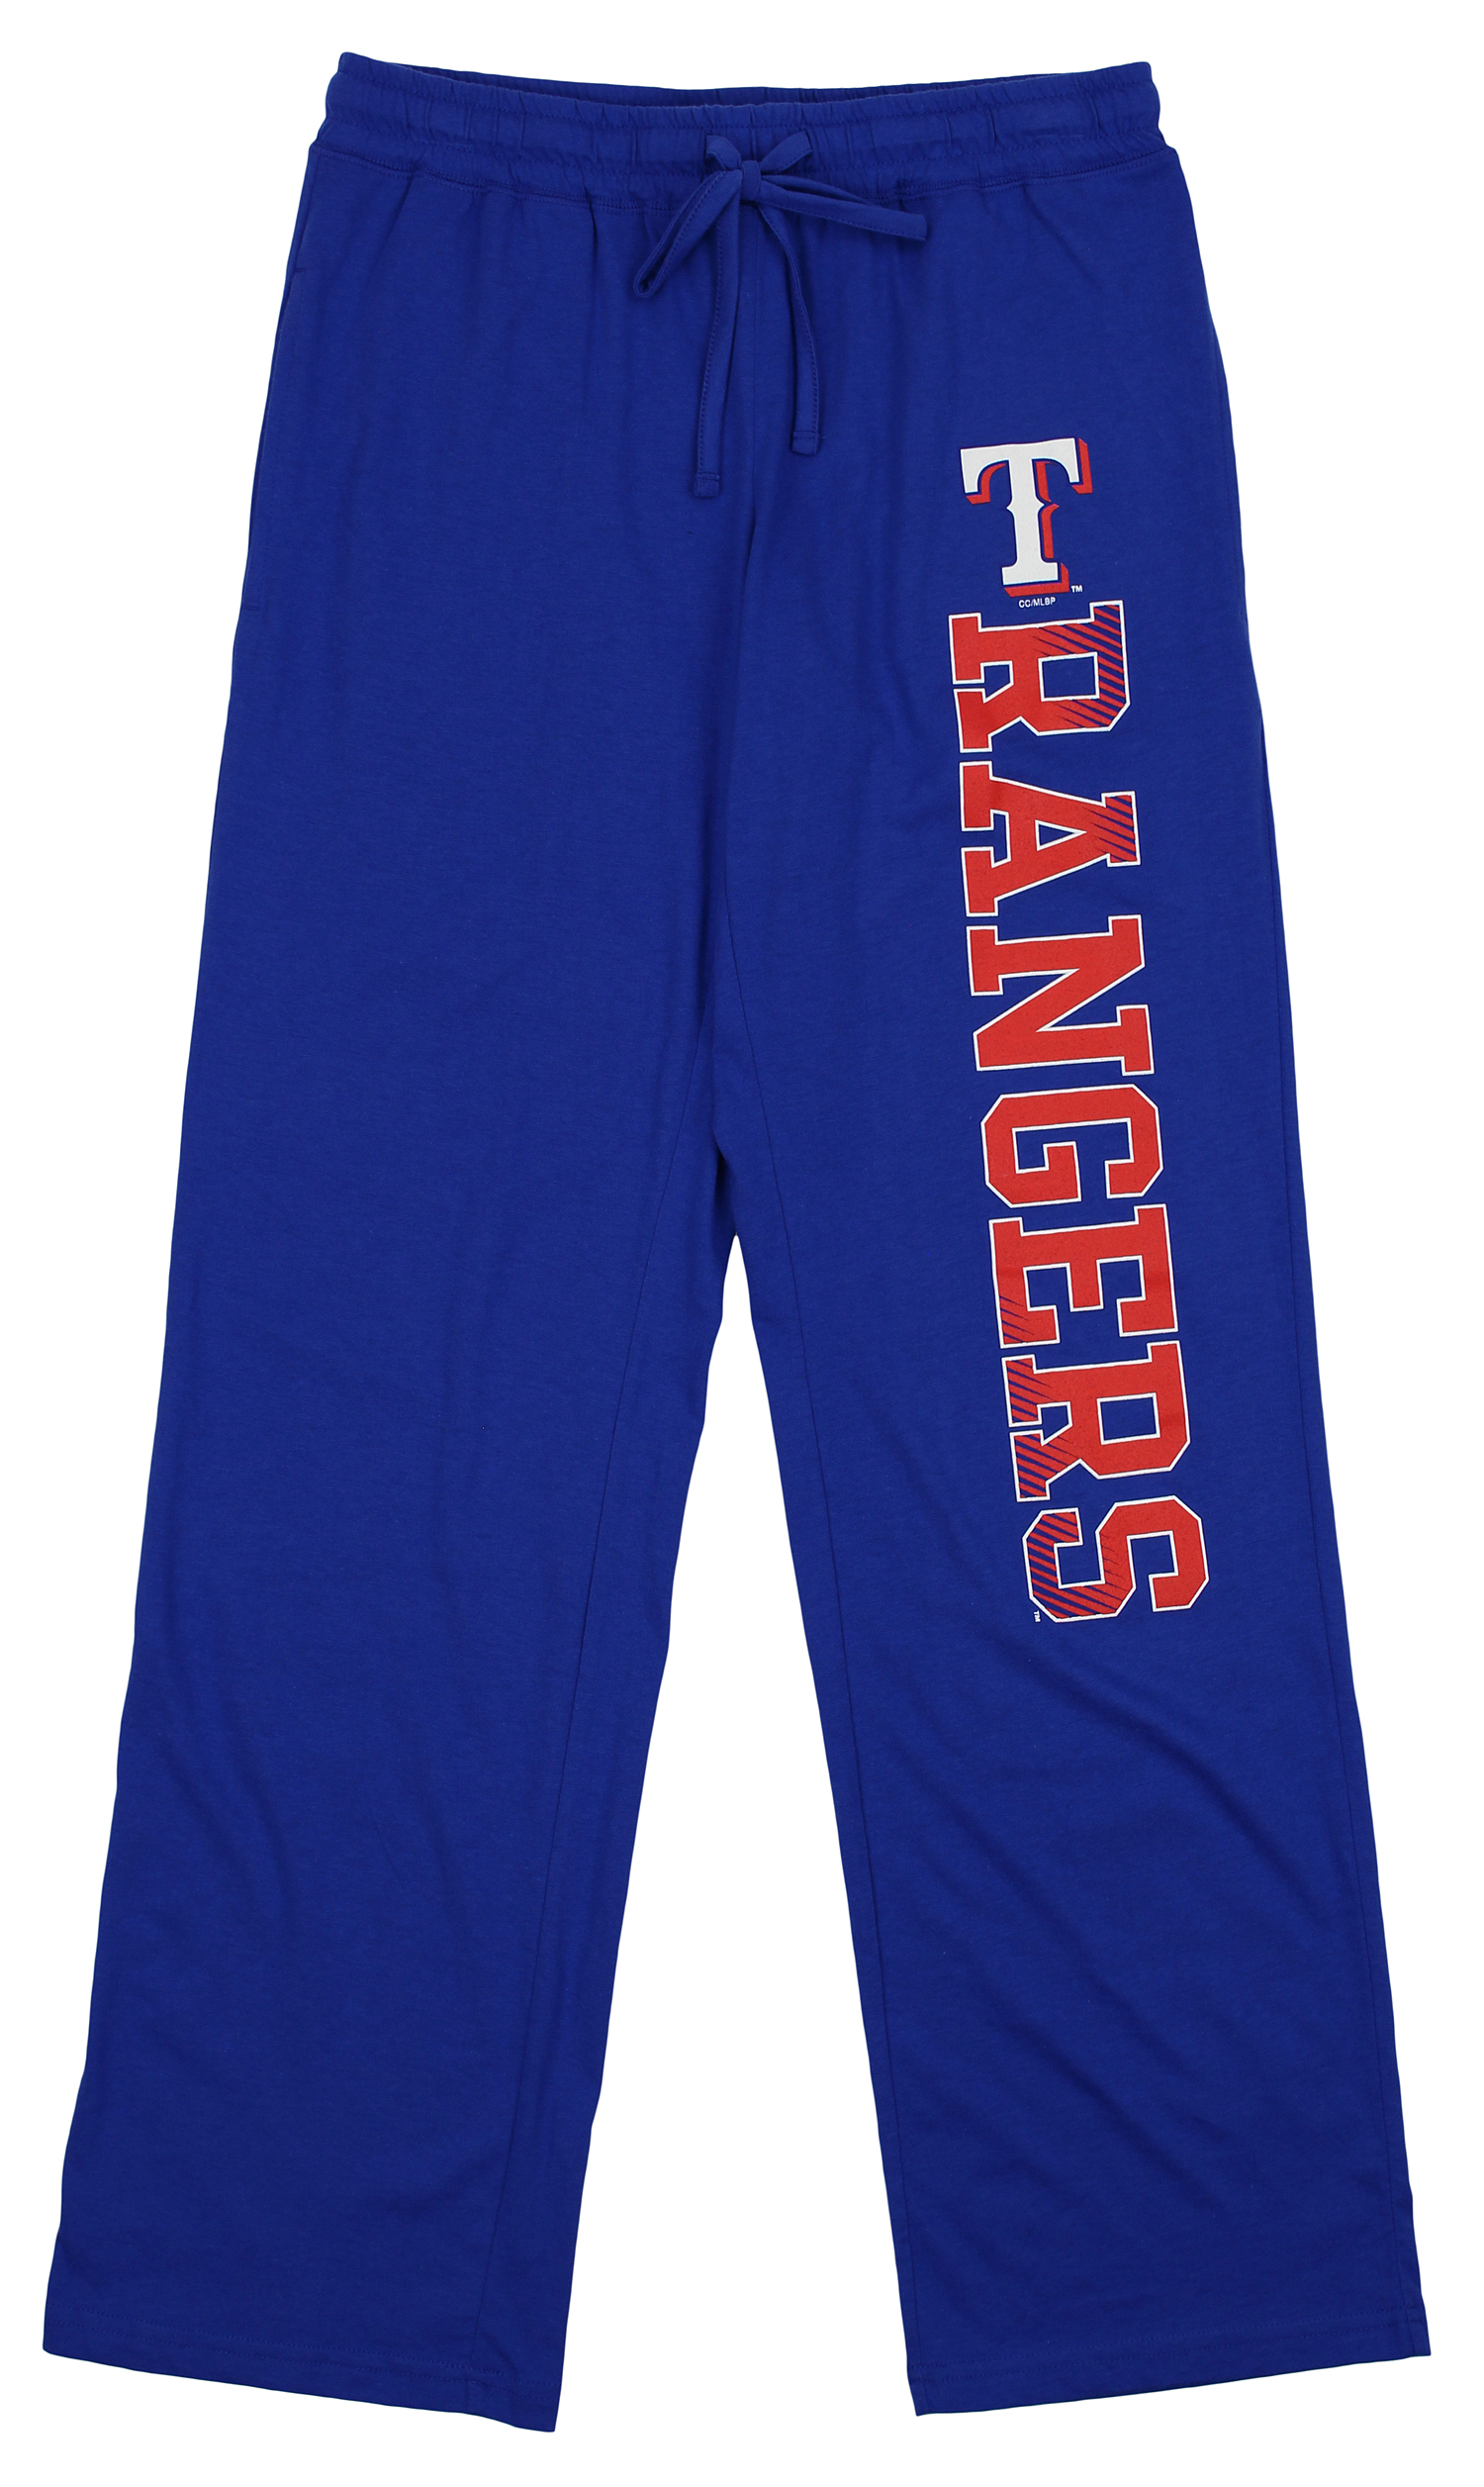 Concepts Sport MLB Women's Texas Rangers Knit Pants | eBay